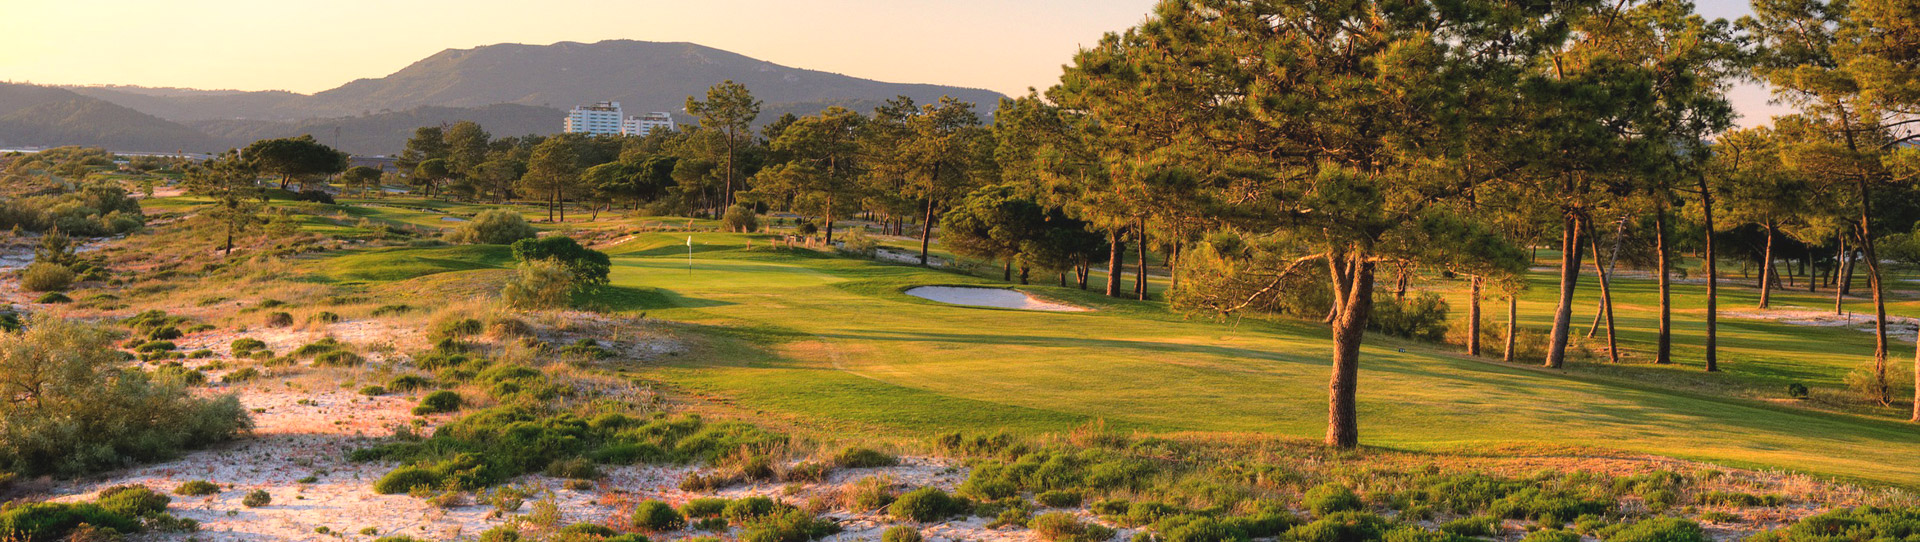 Portugal golf courses - Troia Golf Course - Photo 3